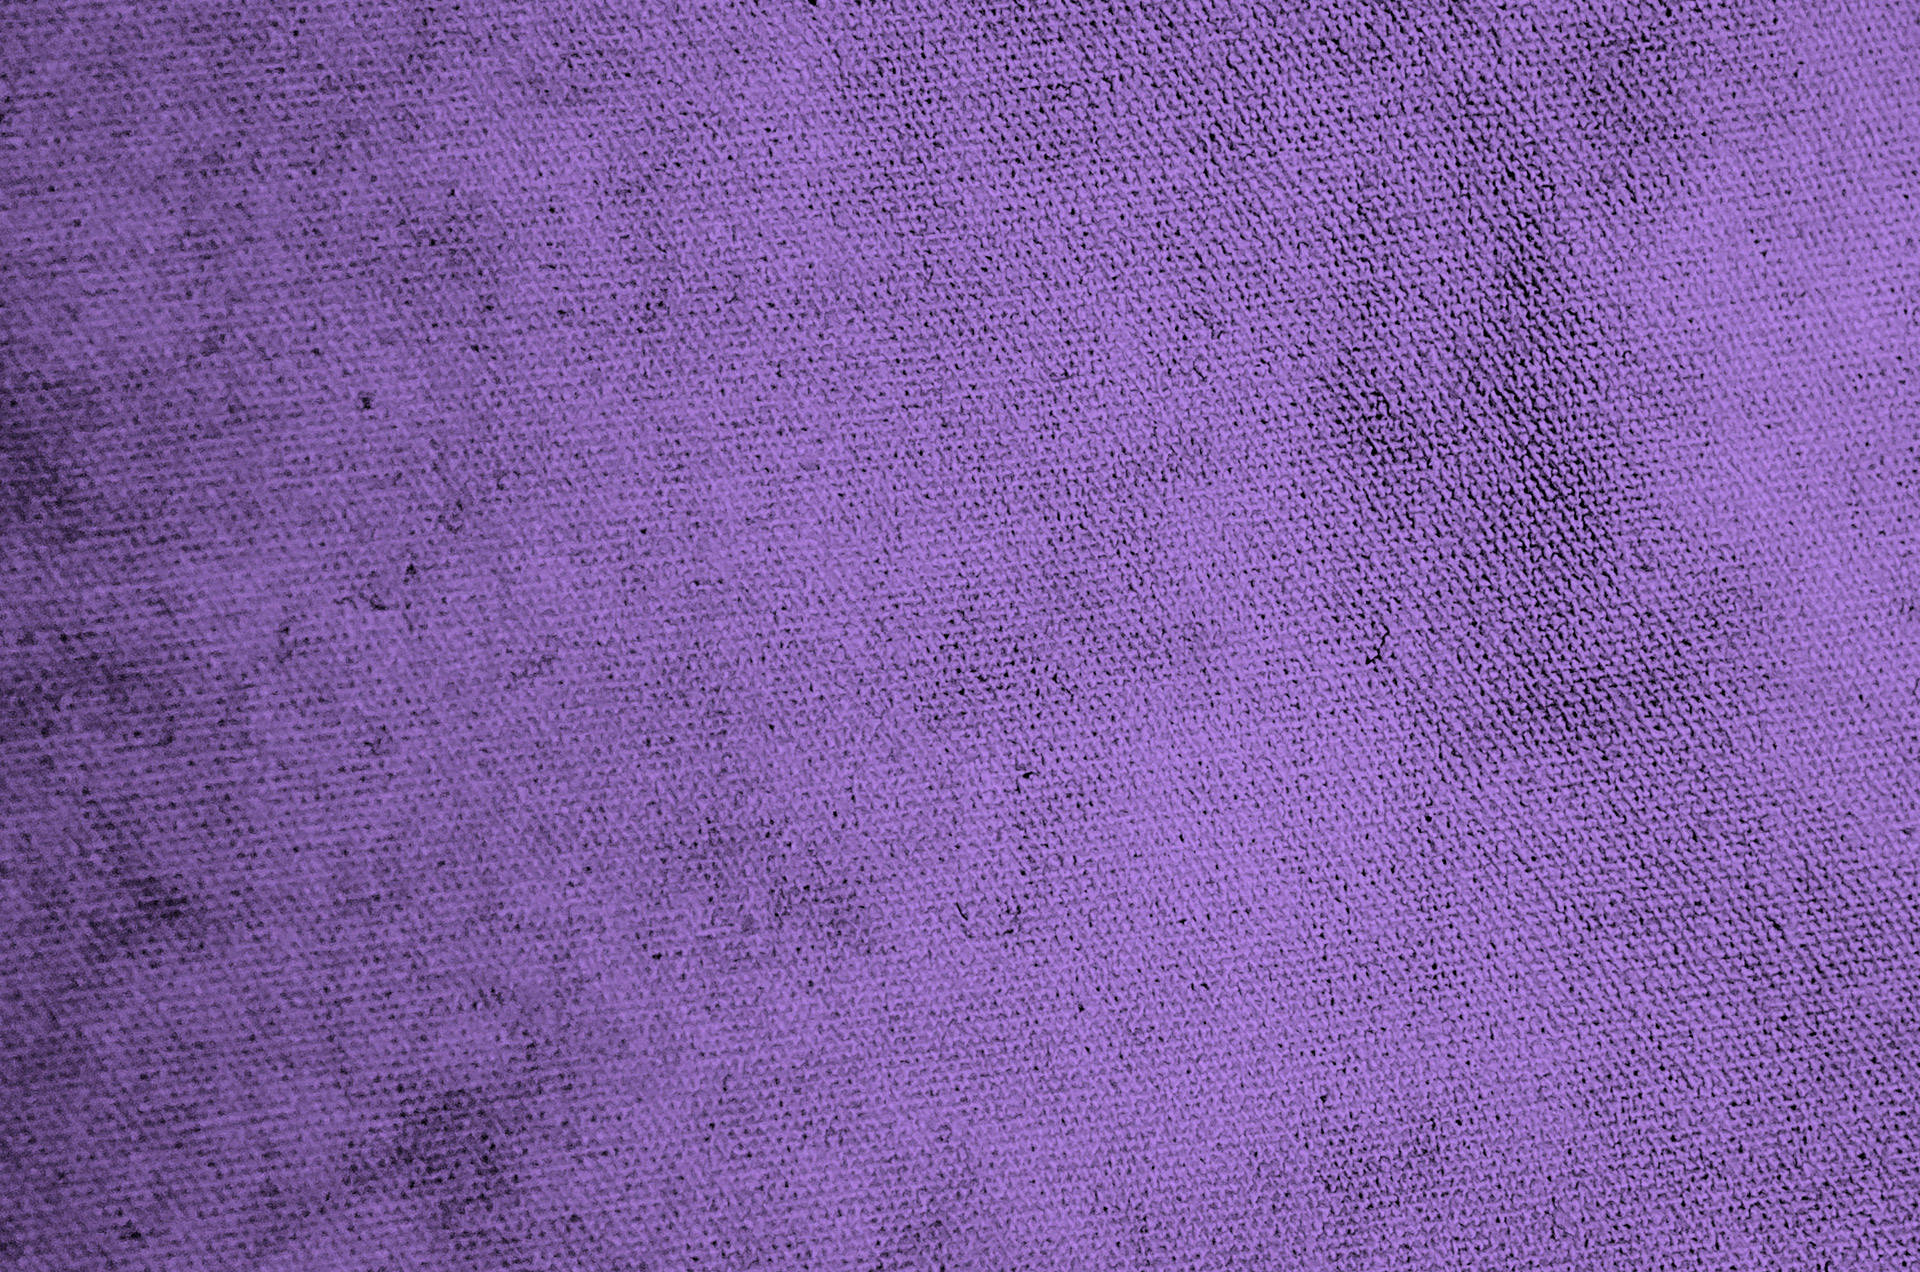 Textured Violet Backdrop Picture